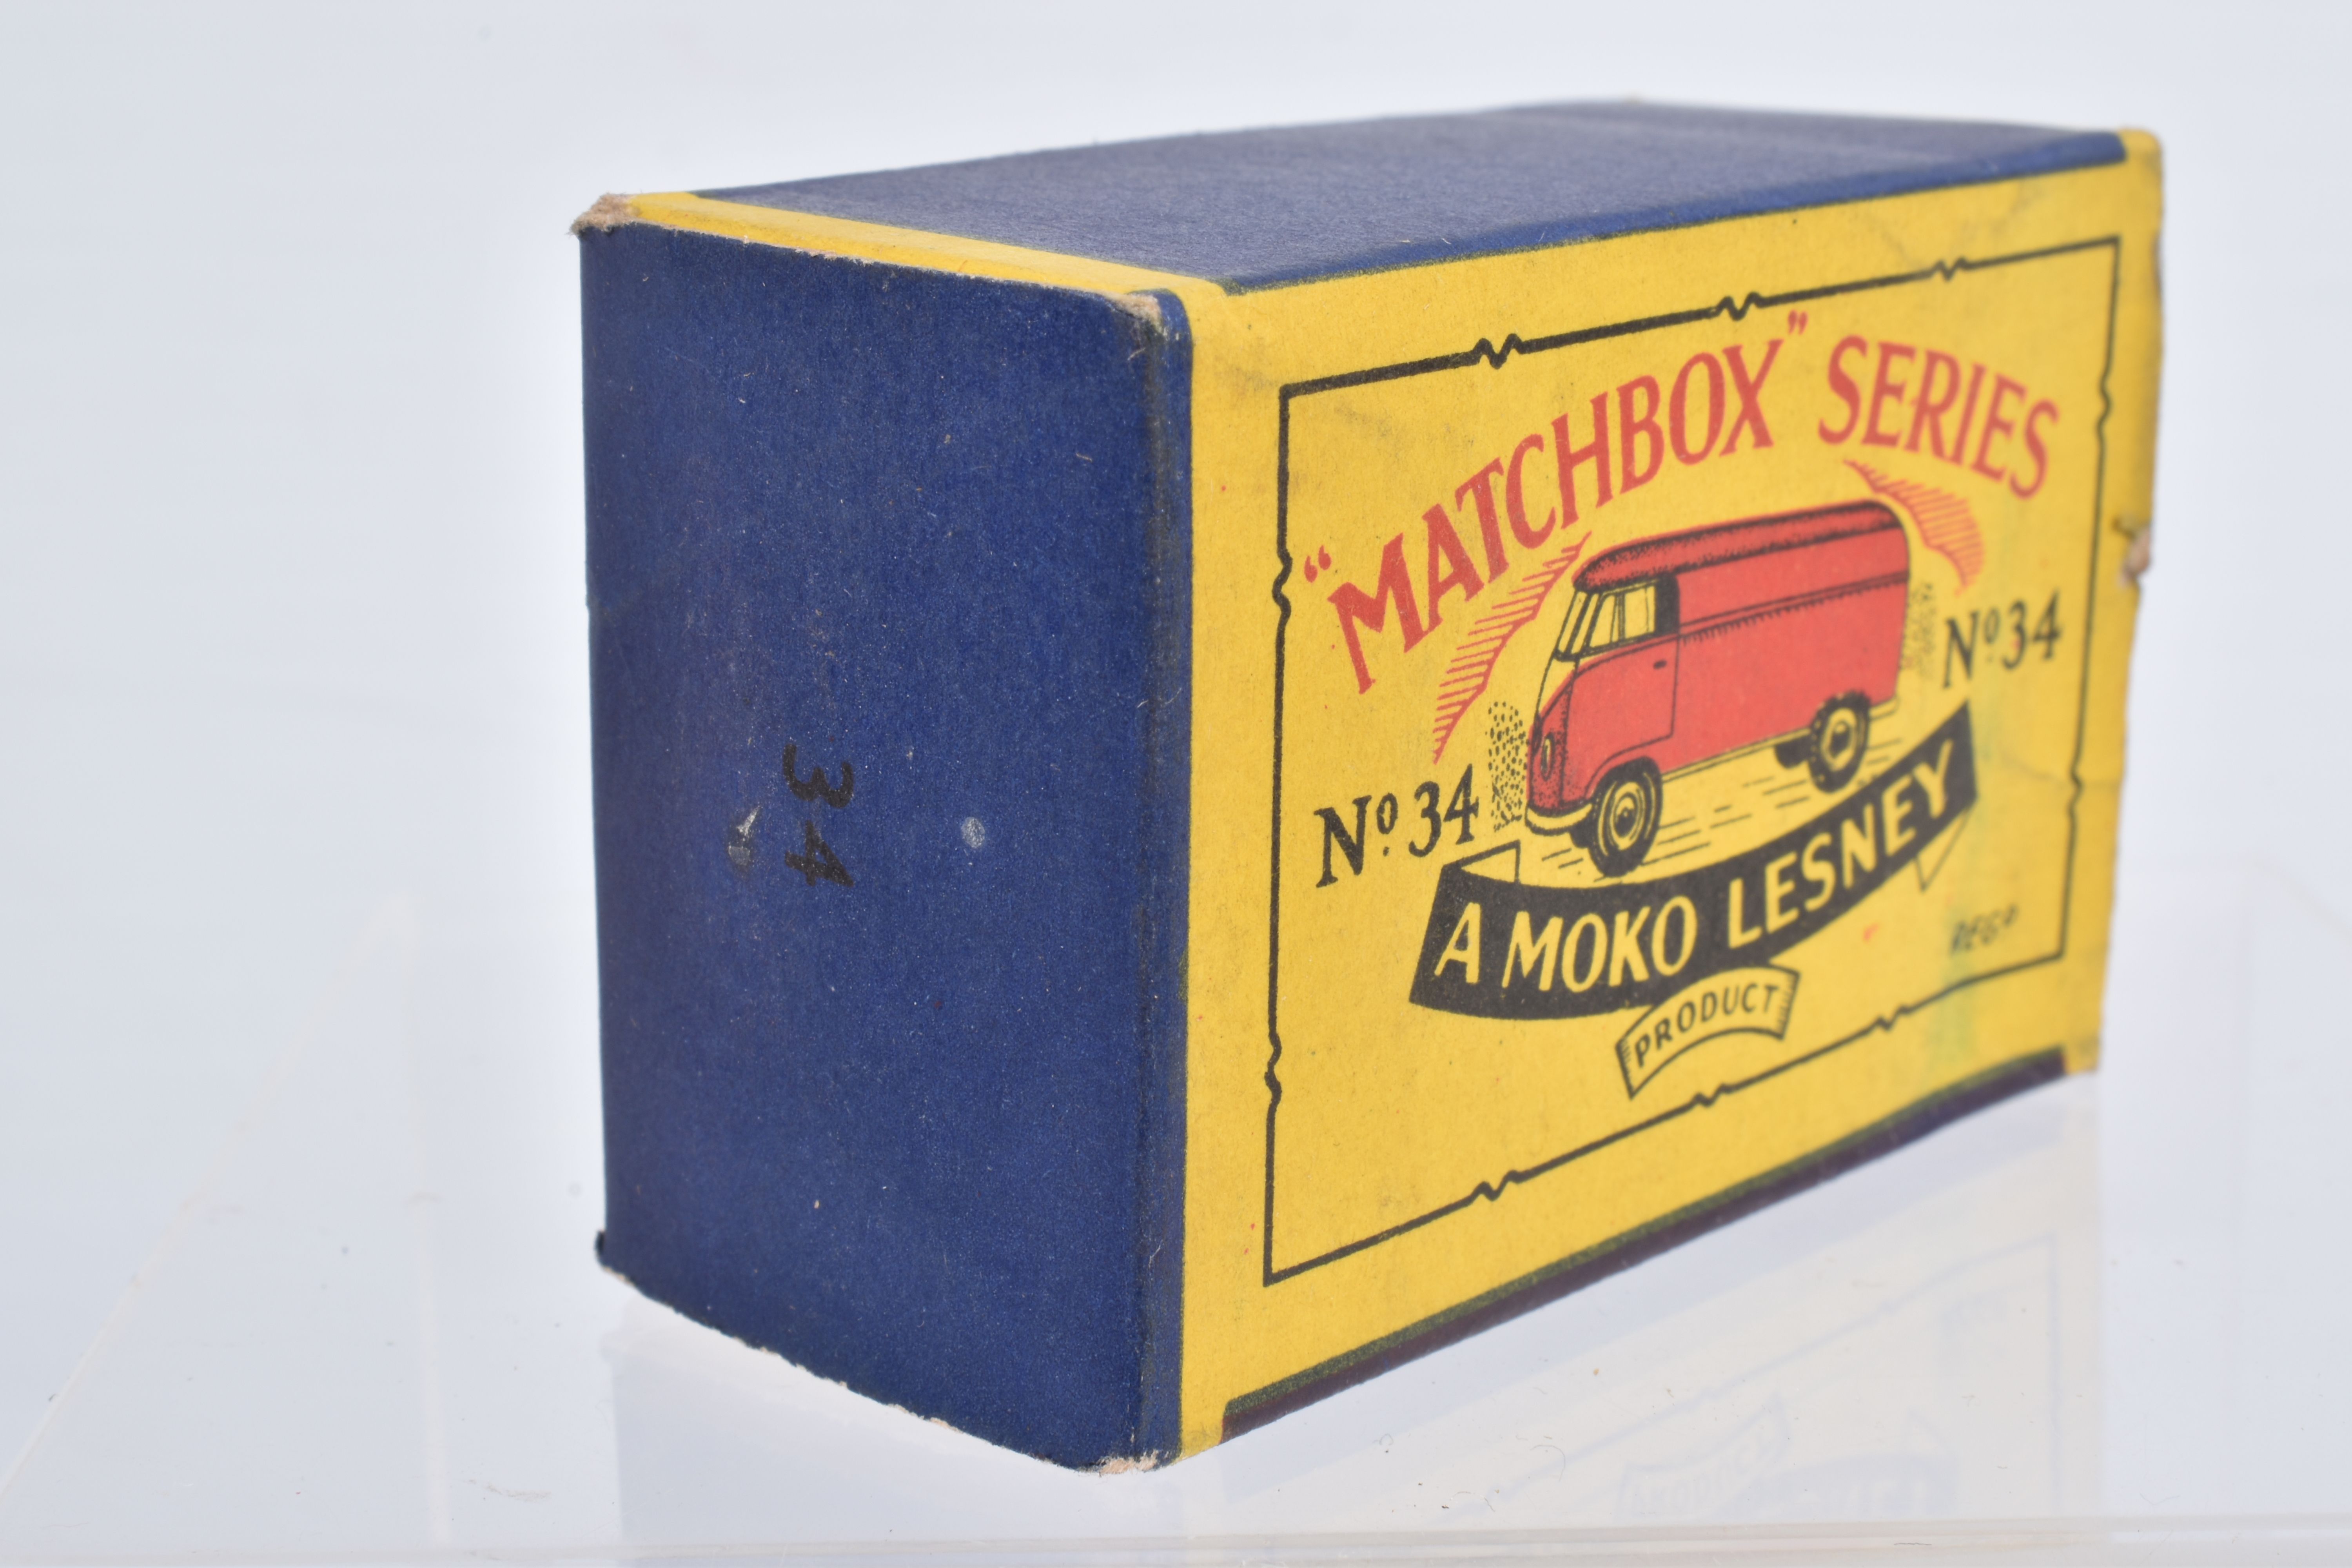 FIVE BOXED MOKO LESNEY MATCHBOX SERIES VAN MODELS, Volkswagen Van, No.34, metal wheels, Bedford - Image 4 of 36